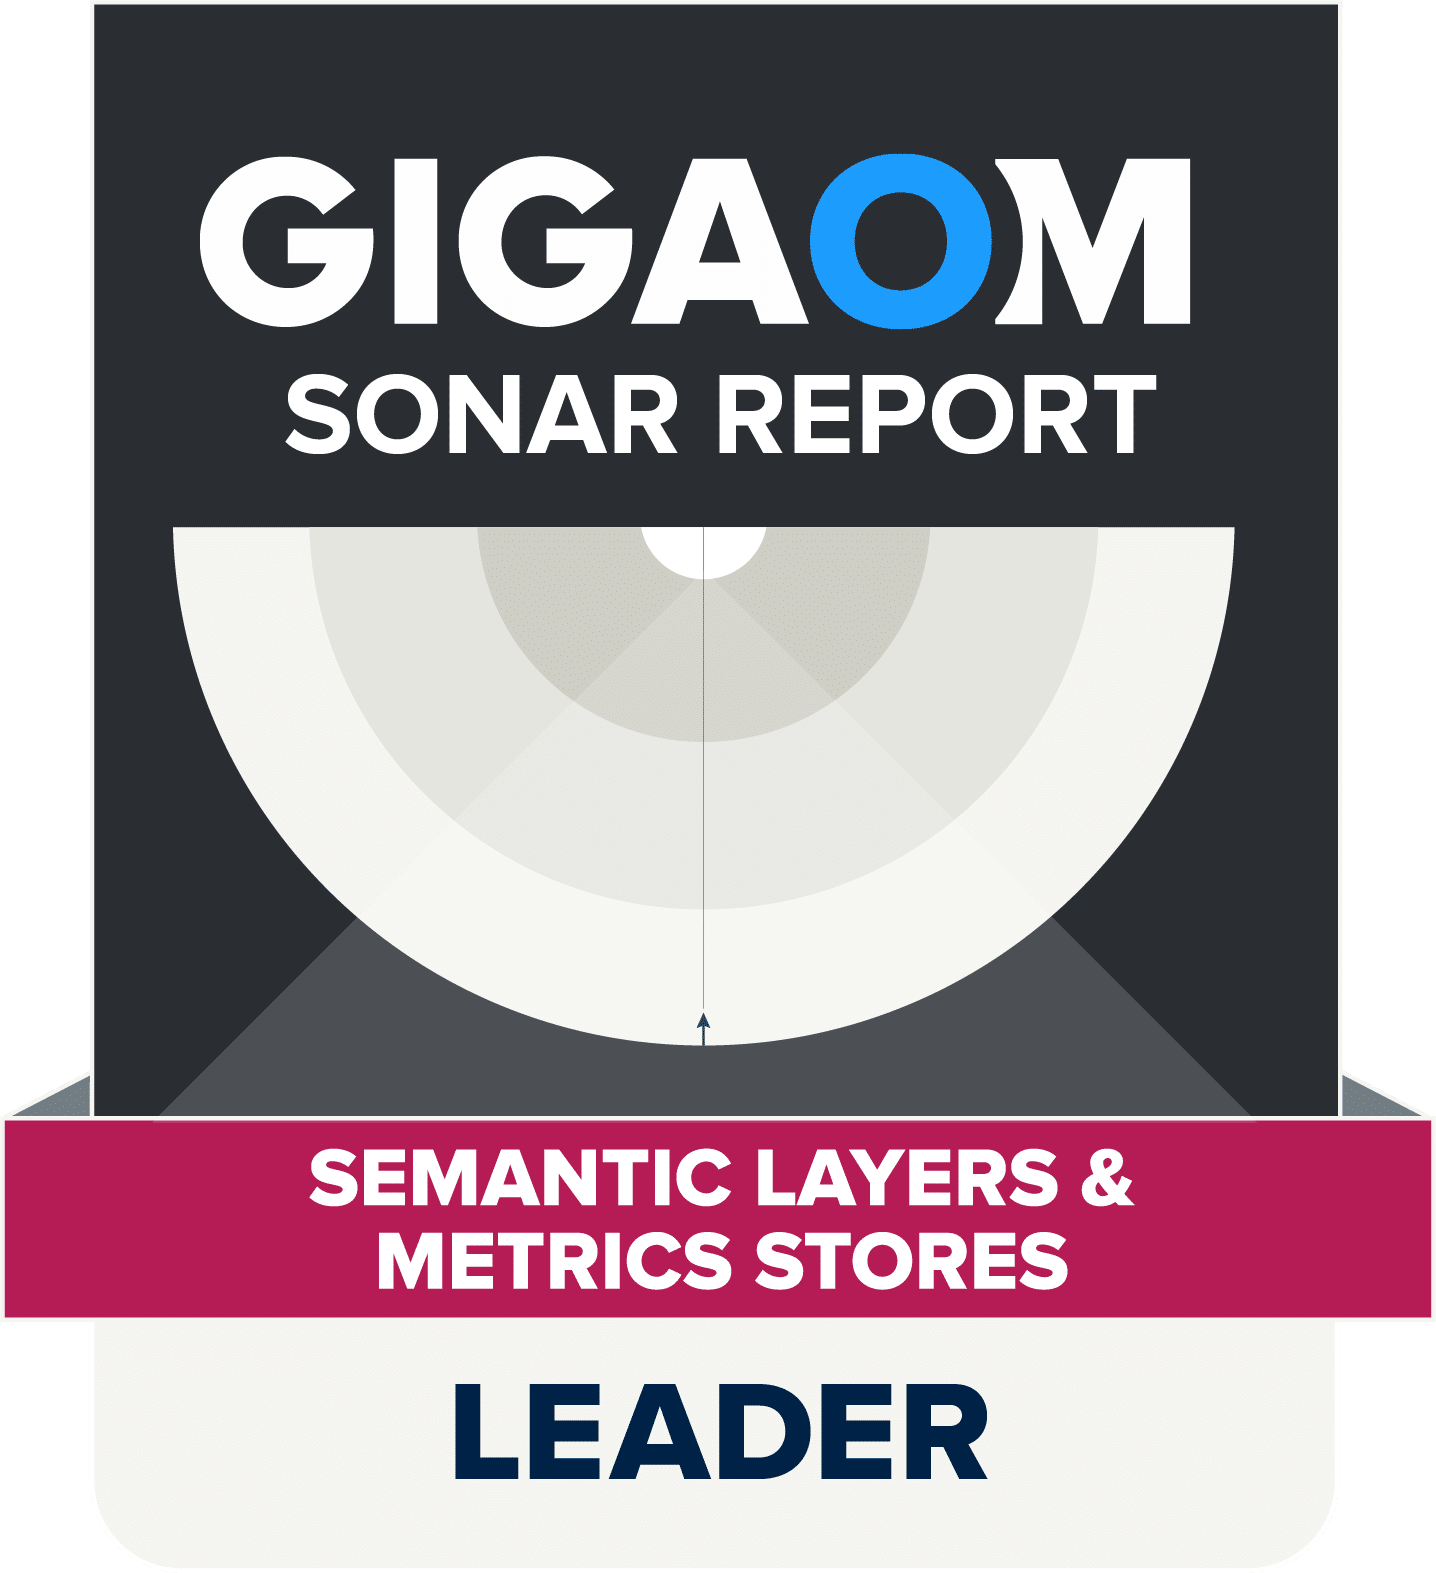 GigaOm Sonar Report - Leader